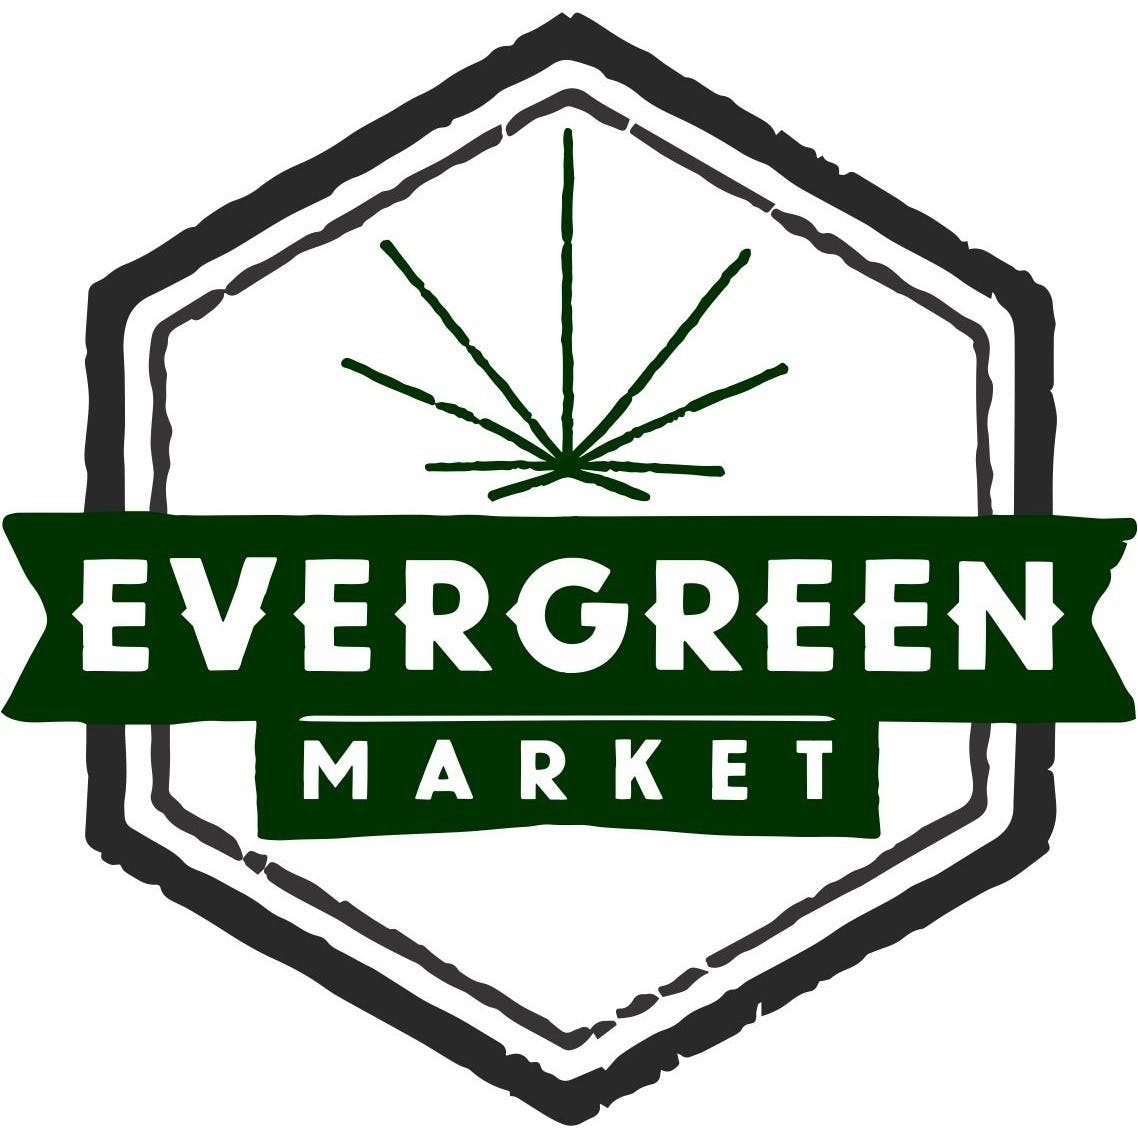 marijuana-dispensaries-evergreen-market-auburn-in-auburn-on-line-menu-httpwww-theevergreenmarket-com